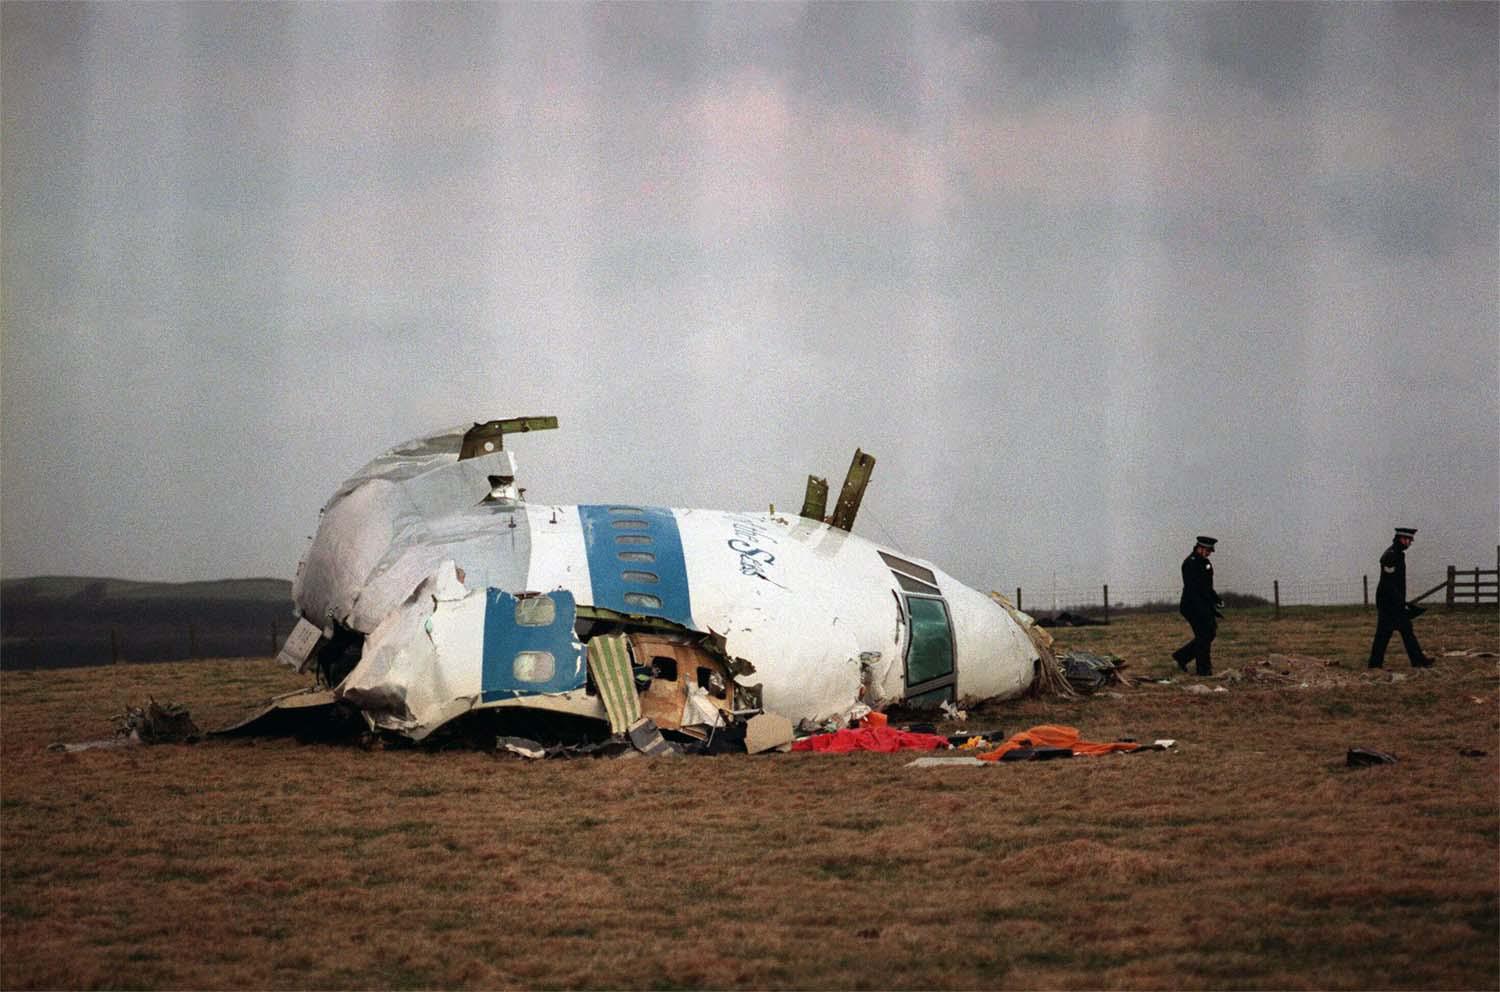 A bomb brought down Pan Am Flight 103 over Lockerbie, Scotland, in 1988